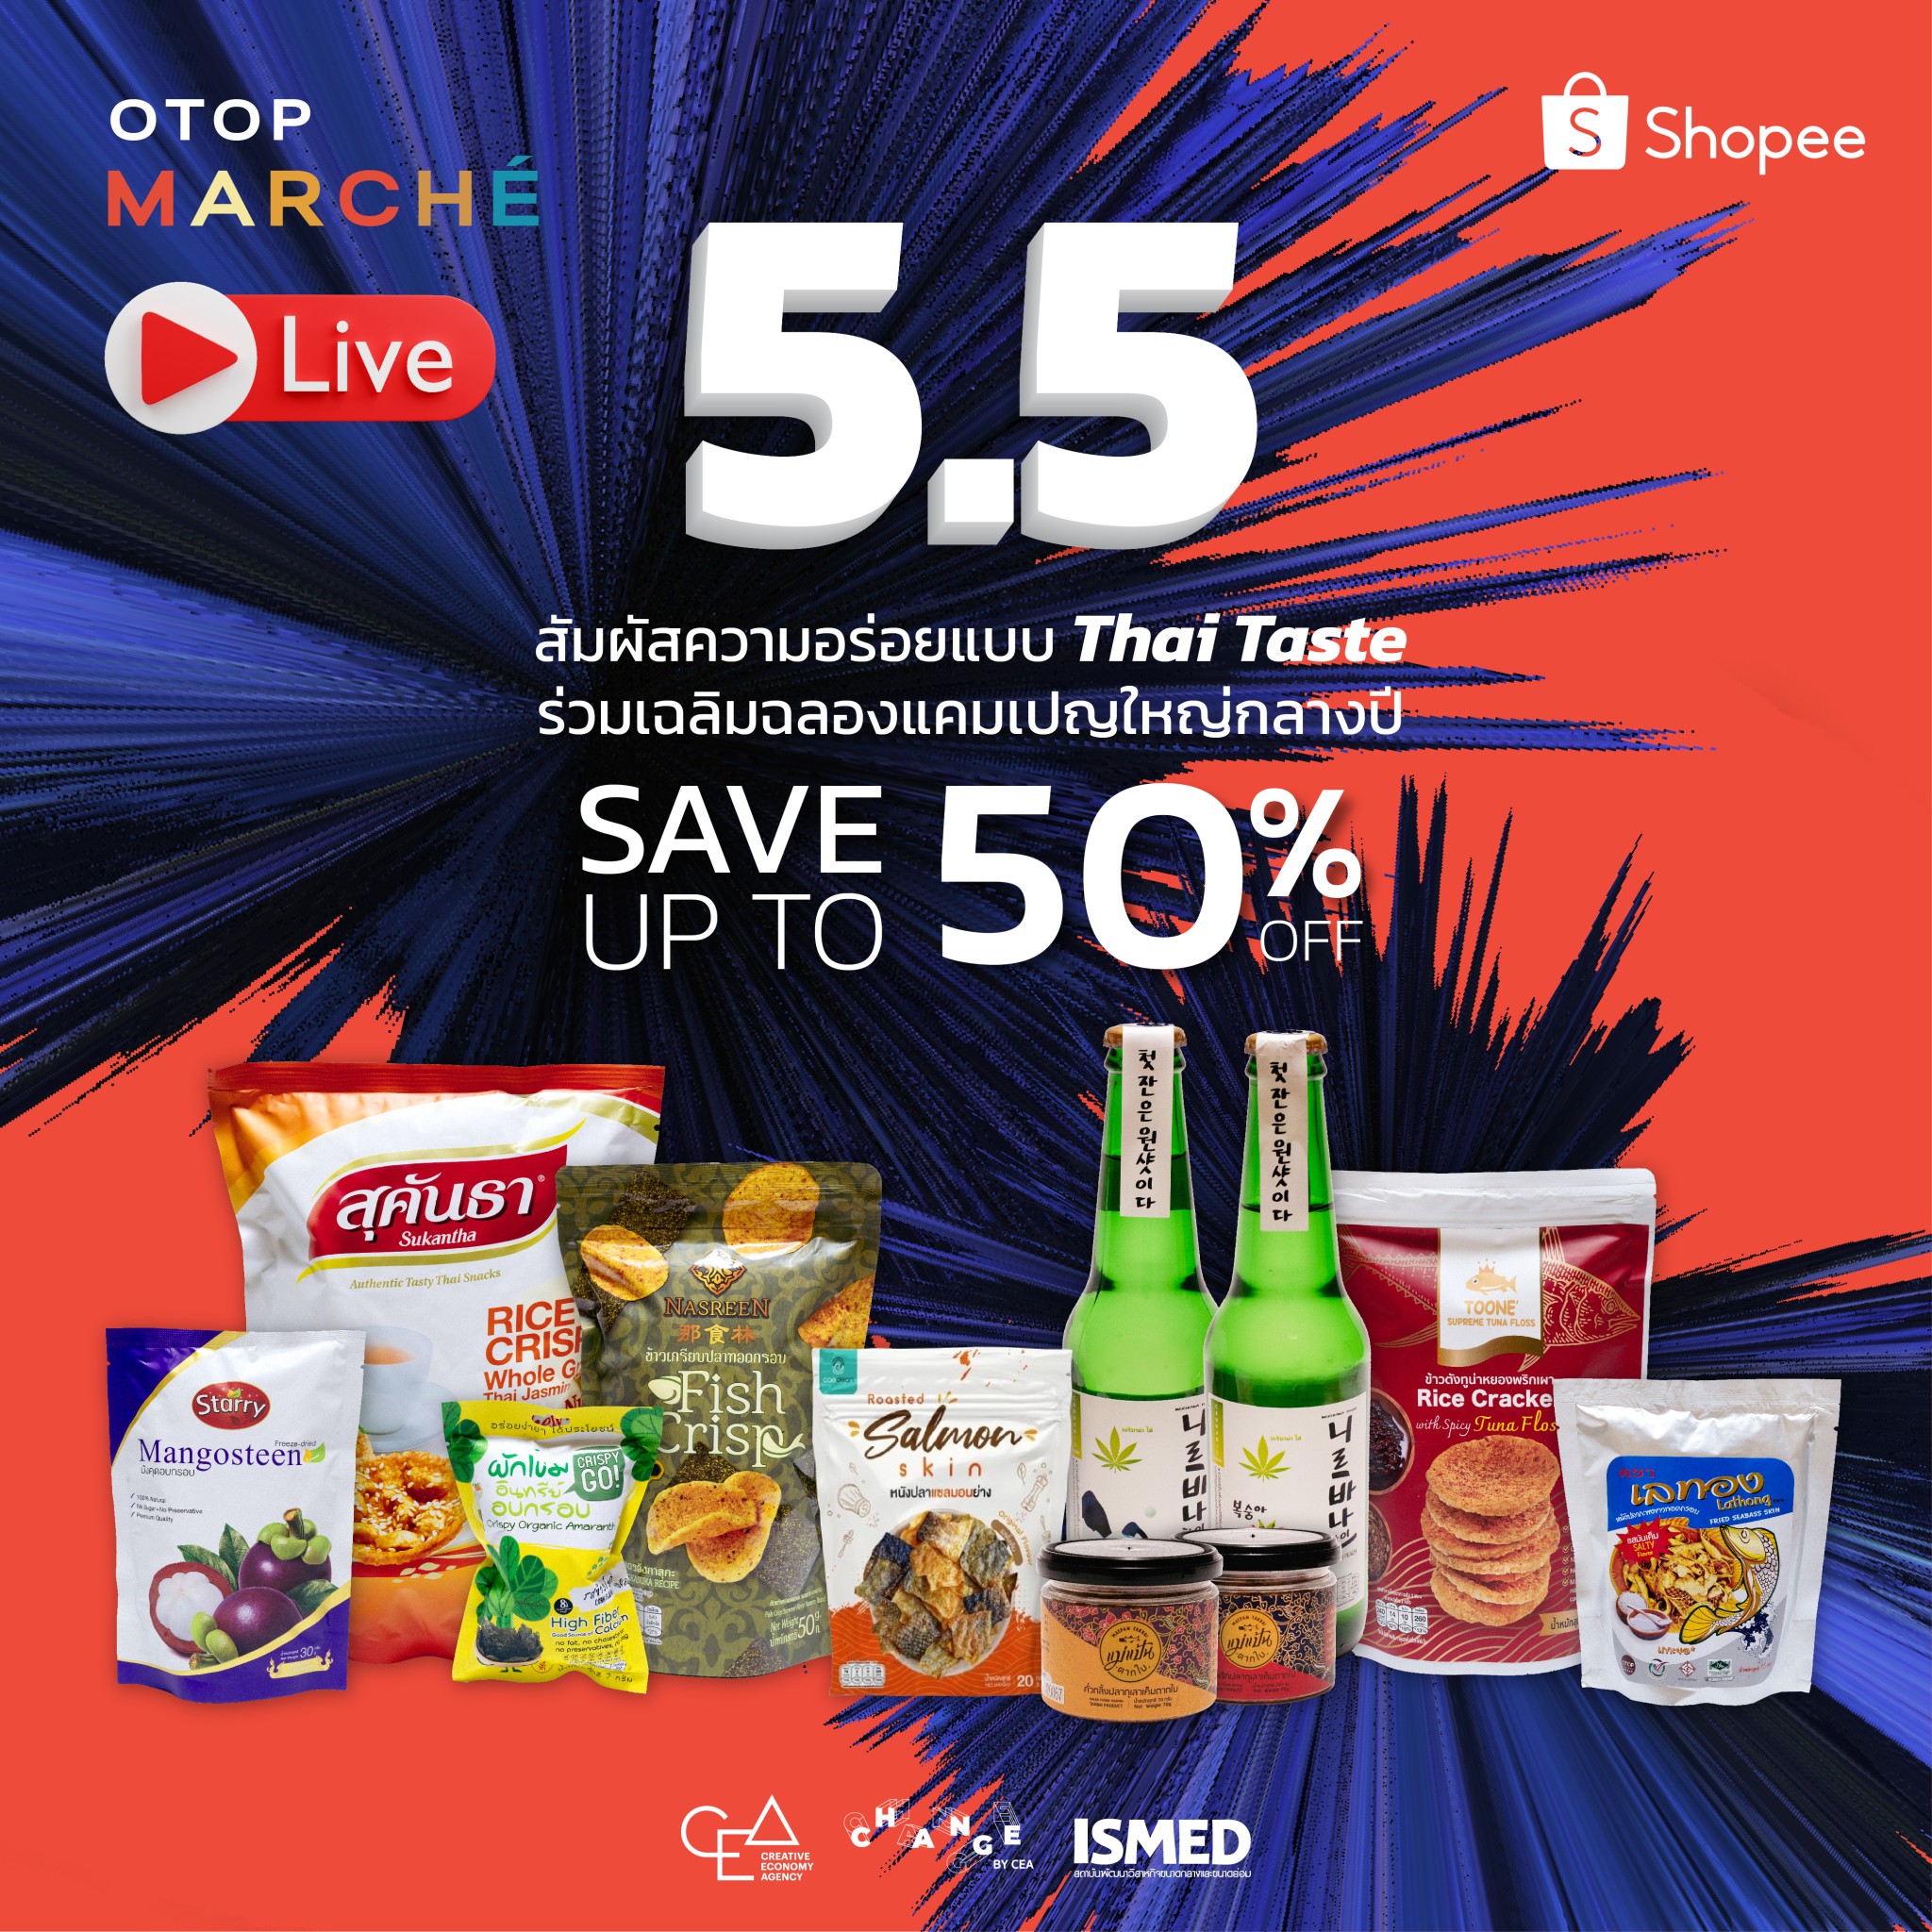 CEA OTOP Marché x Shopee ร่วมเฉลิมฉลองแคมเปญใหญ่กลางปีกับ Deal สุดพิเศษ “5.5 CEA OTOP MARCHE LIVE สัมผัสความอร่อยแบบ Thai Taste”